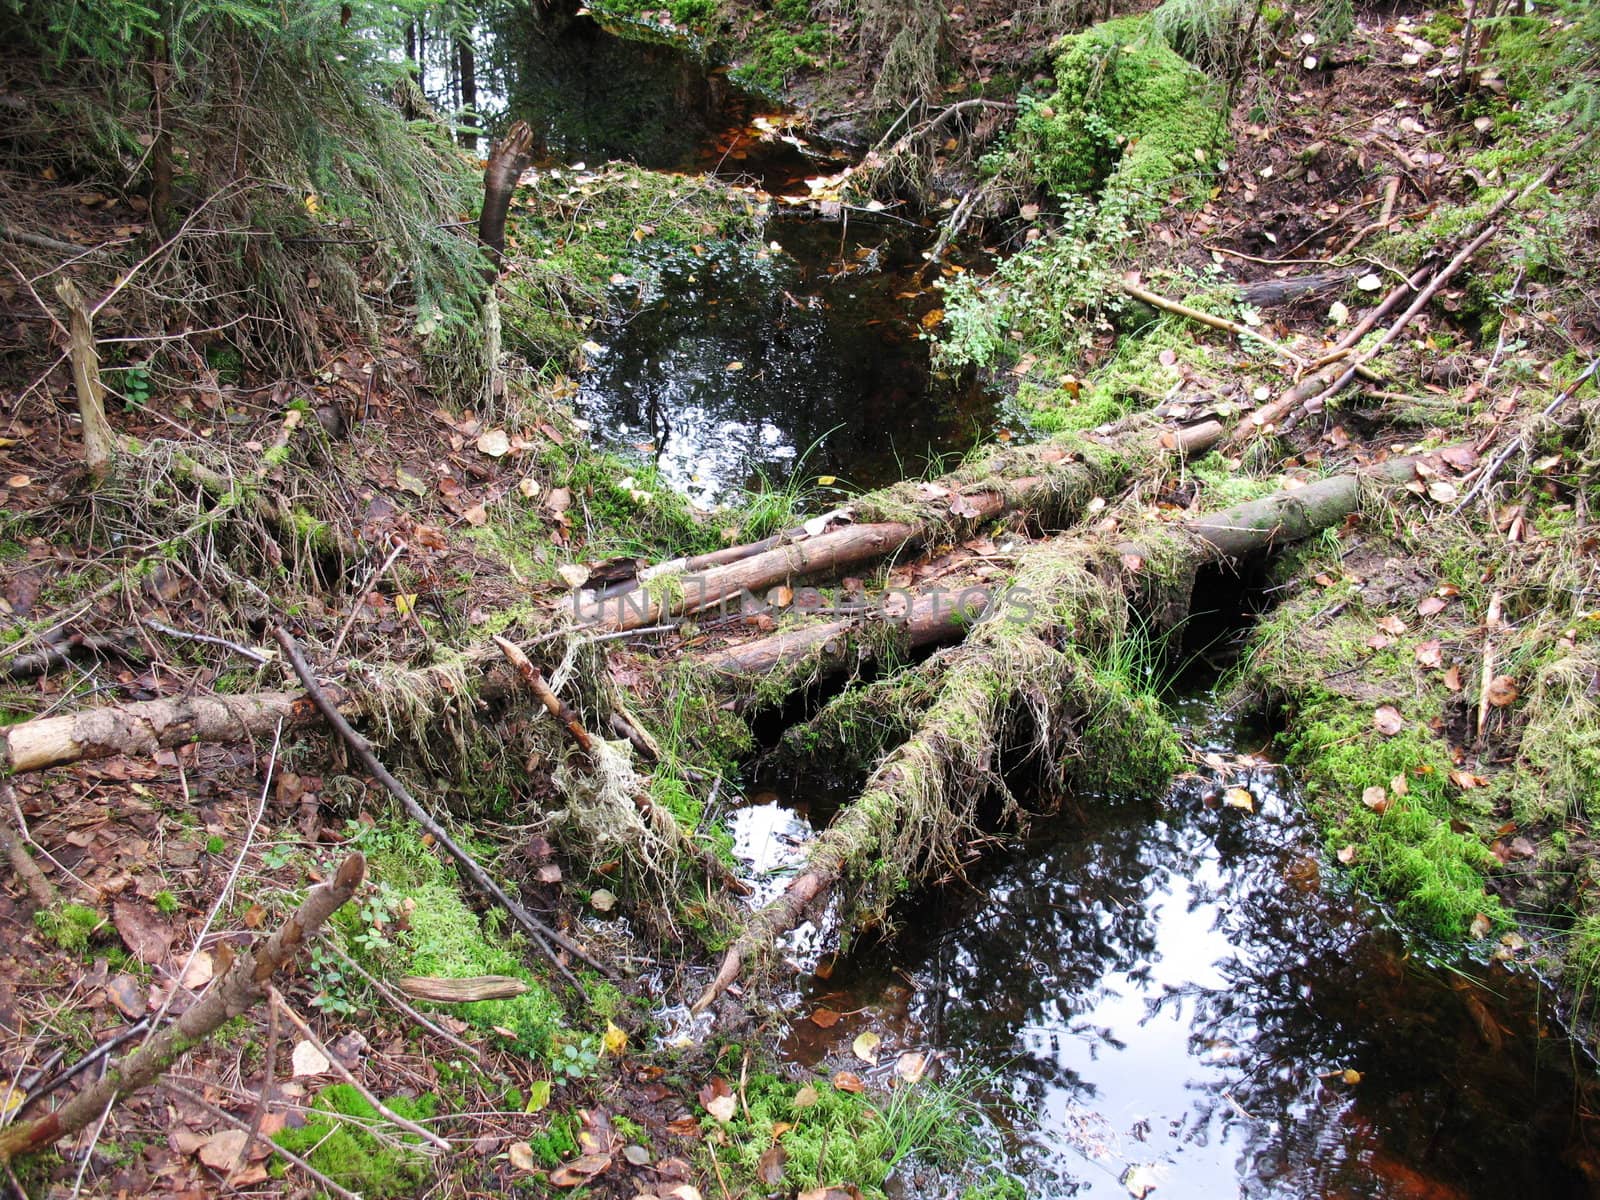 Bridge across the brook in forest